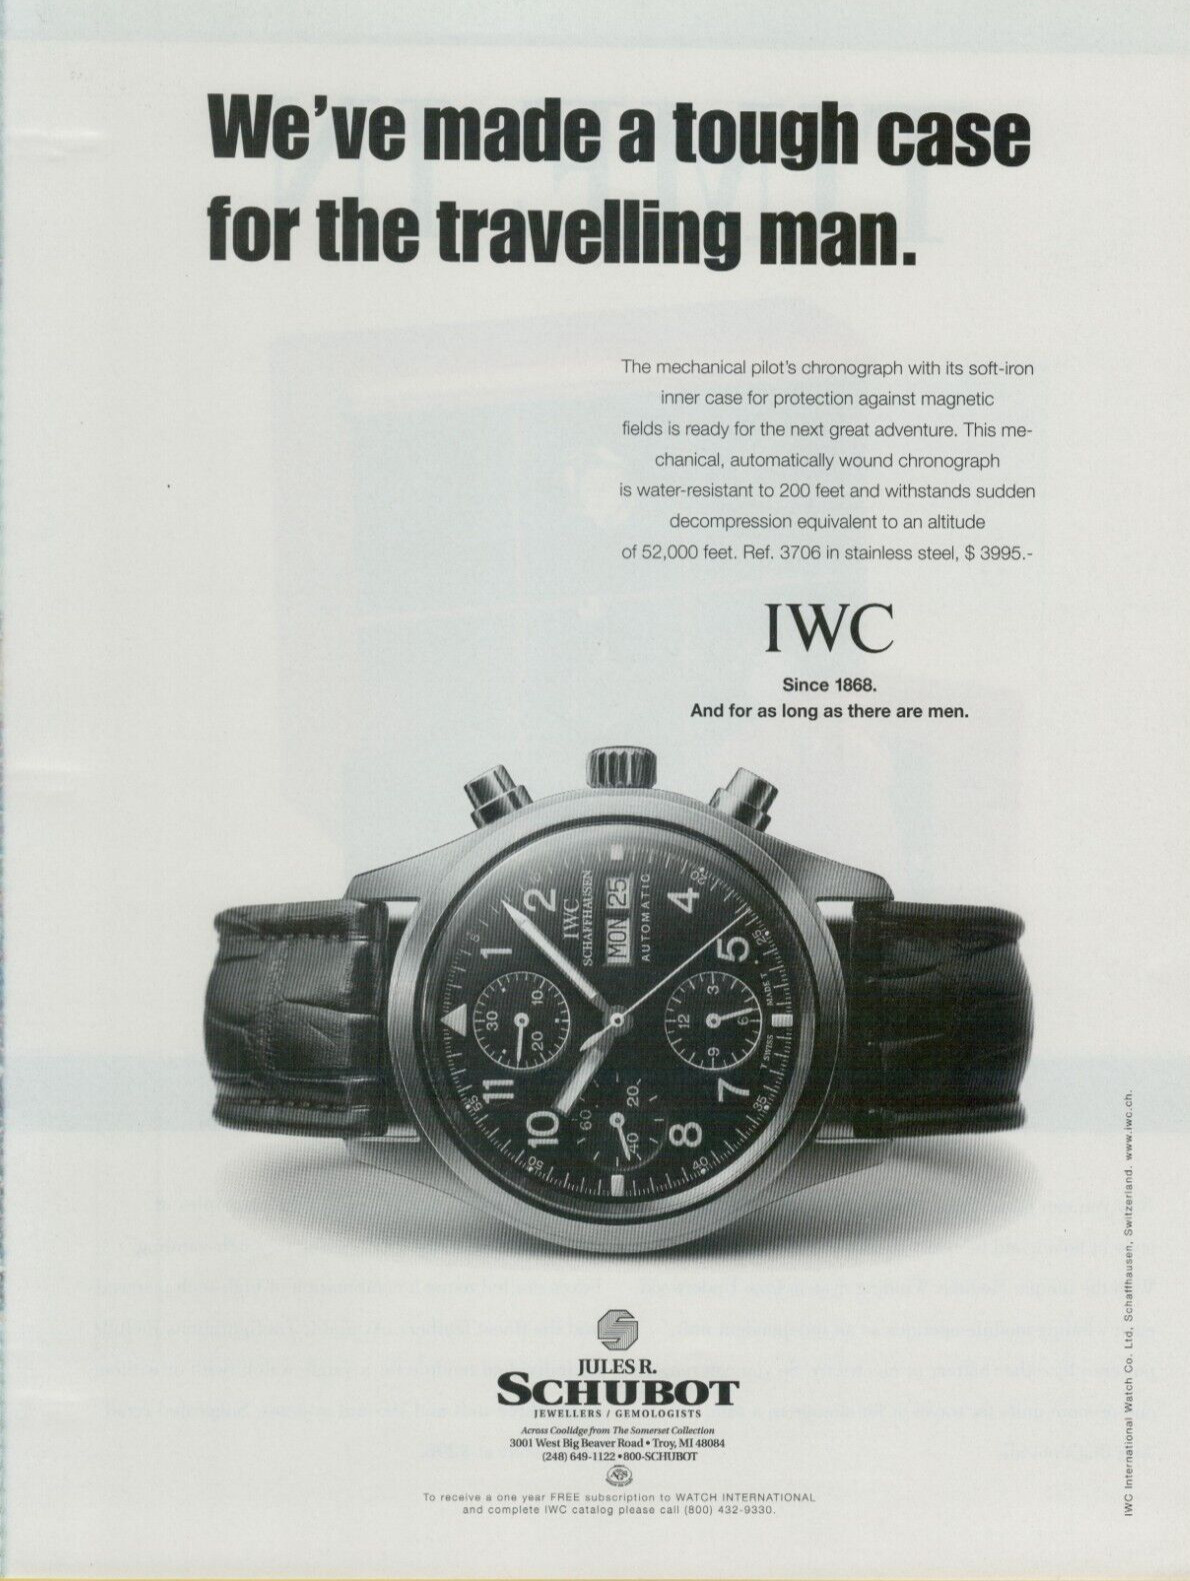 1999 IWC International Watch Co Tough Case Travelling Man  Vintage Print Ad x